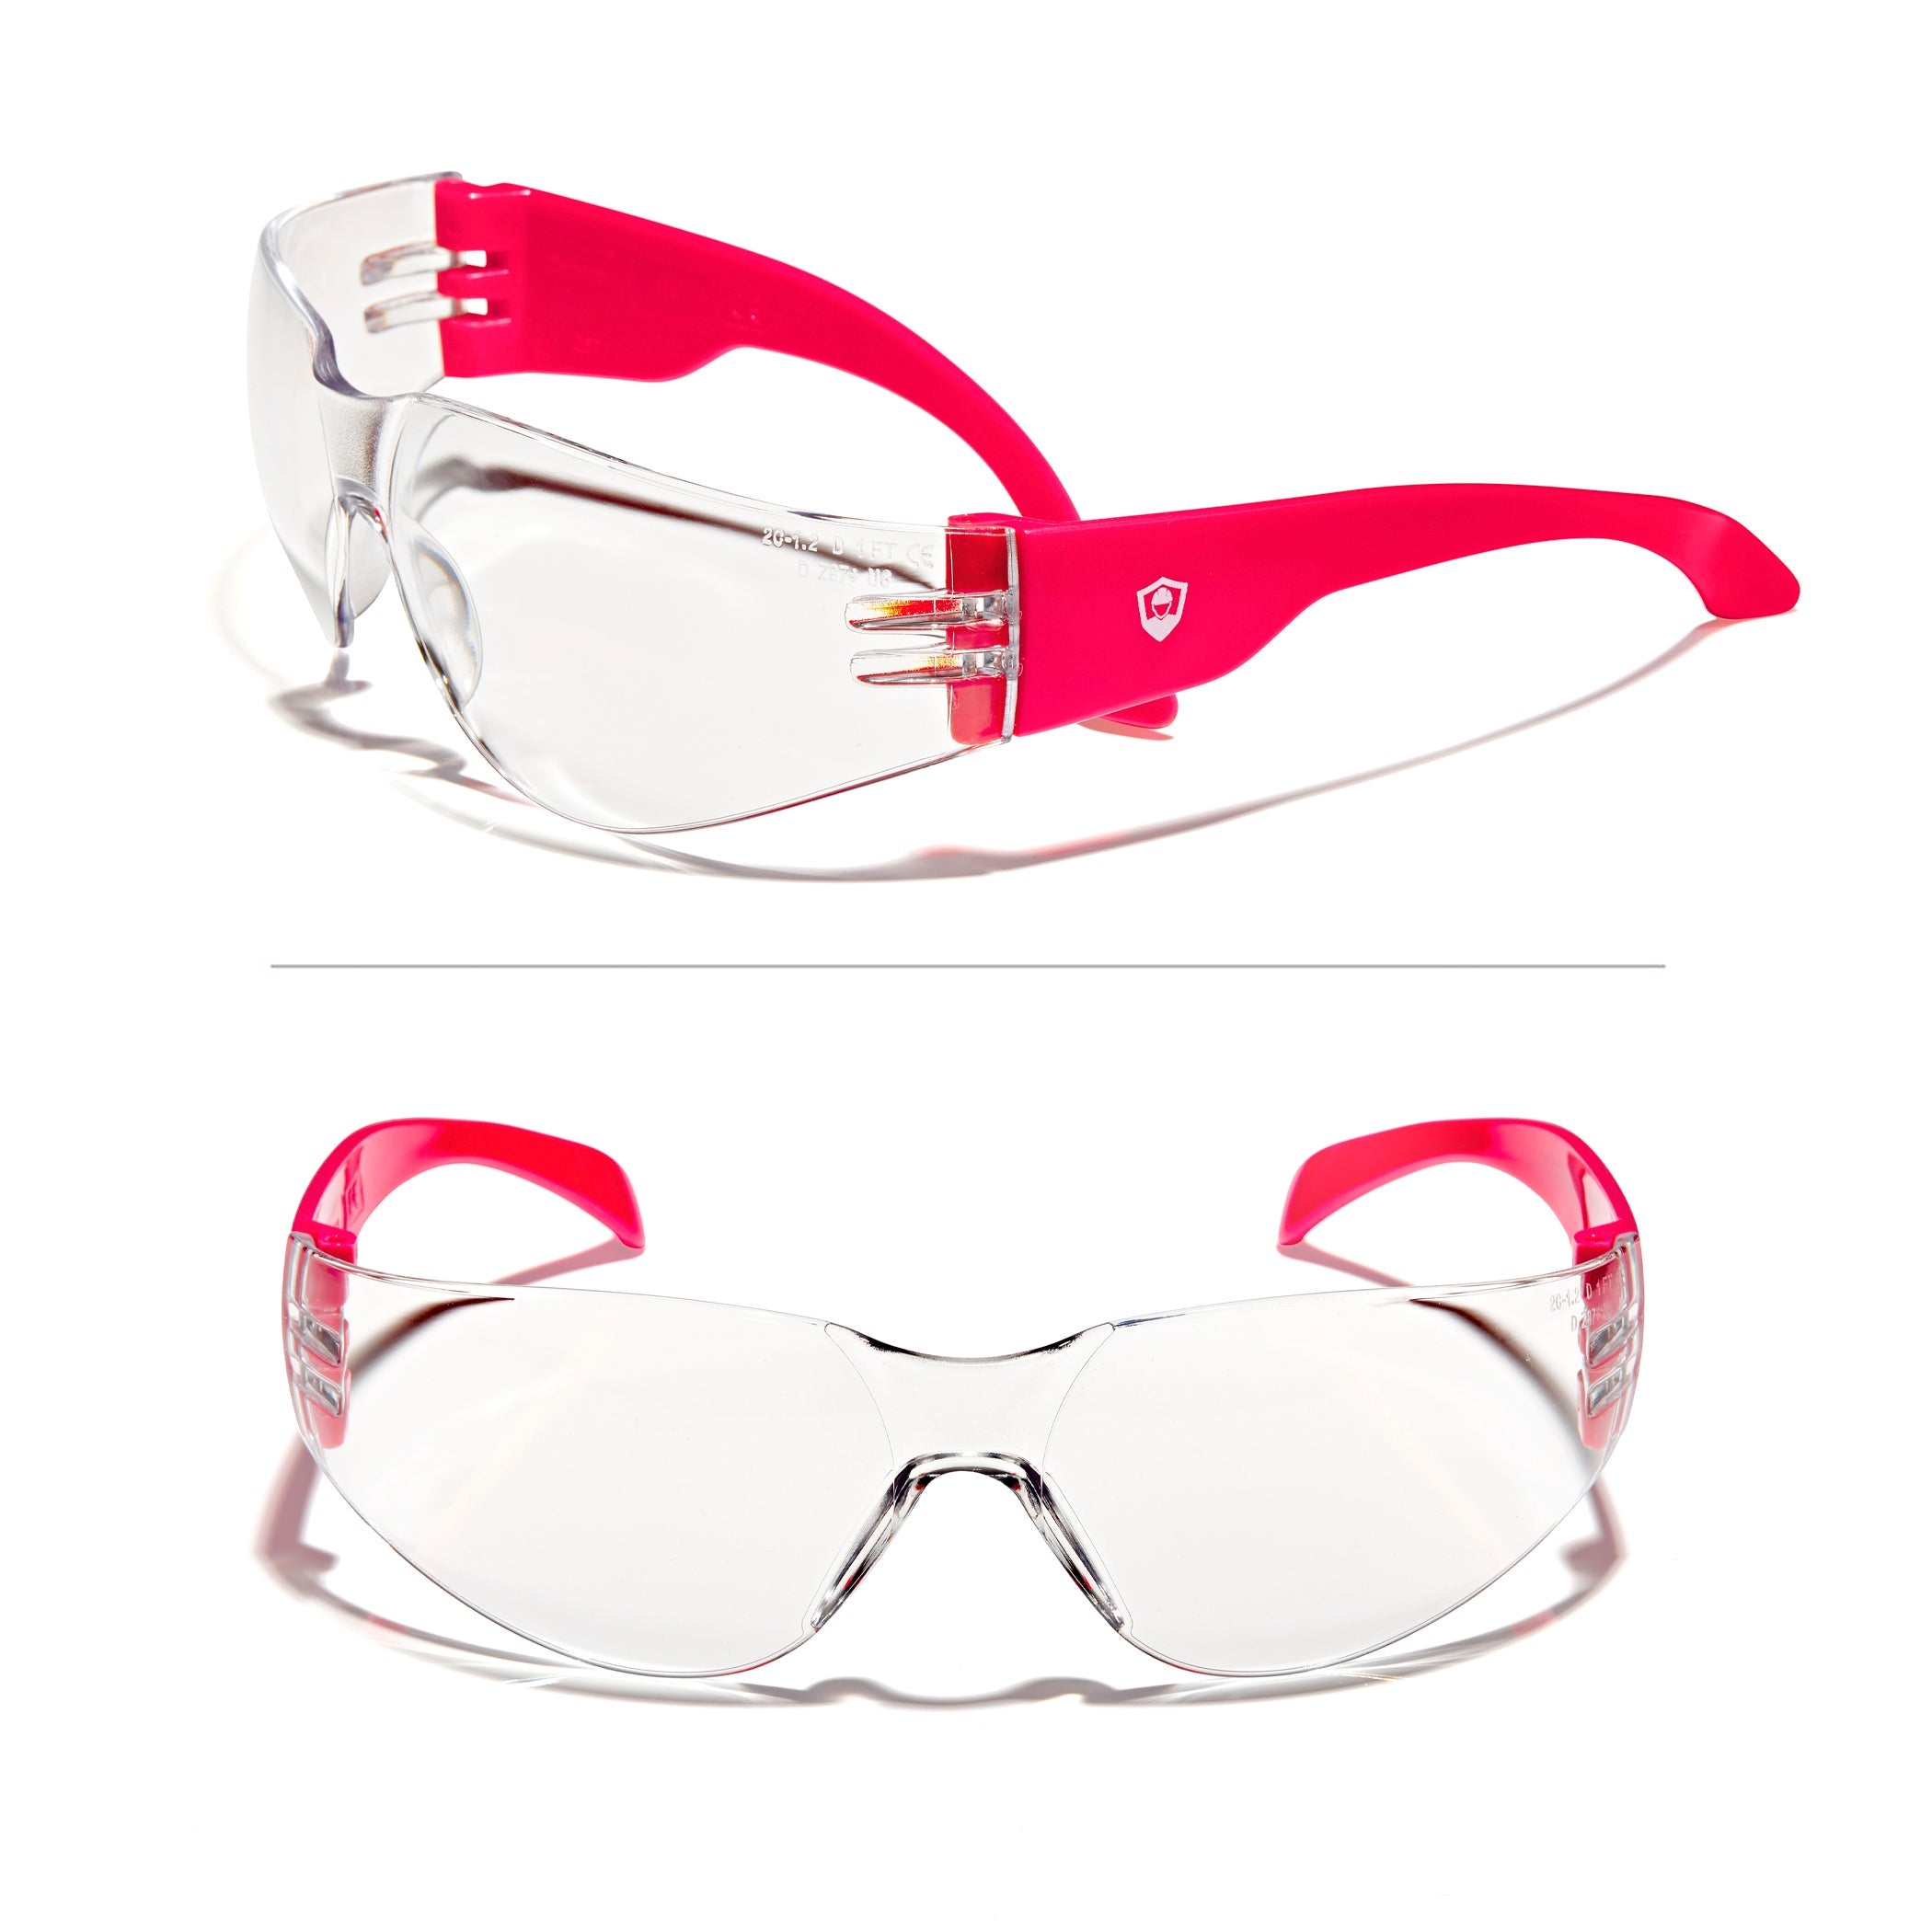 OPTIFENSE™ VS1AF CLEAR Safety Glasses w ANTI-FOG, ANSI Z87+, 30pc per Box - Defender Safety